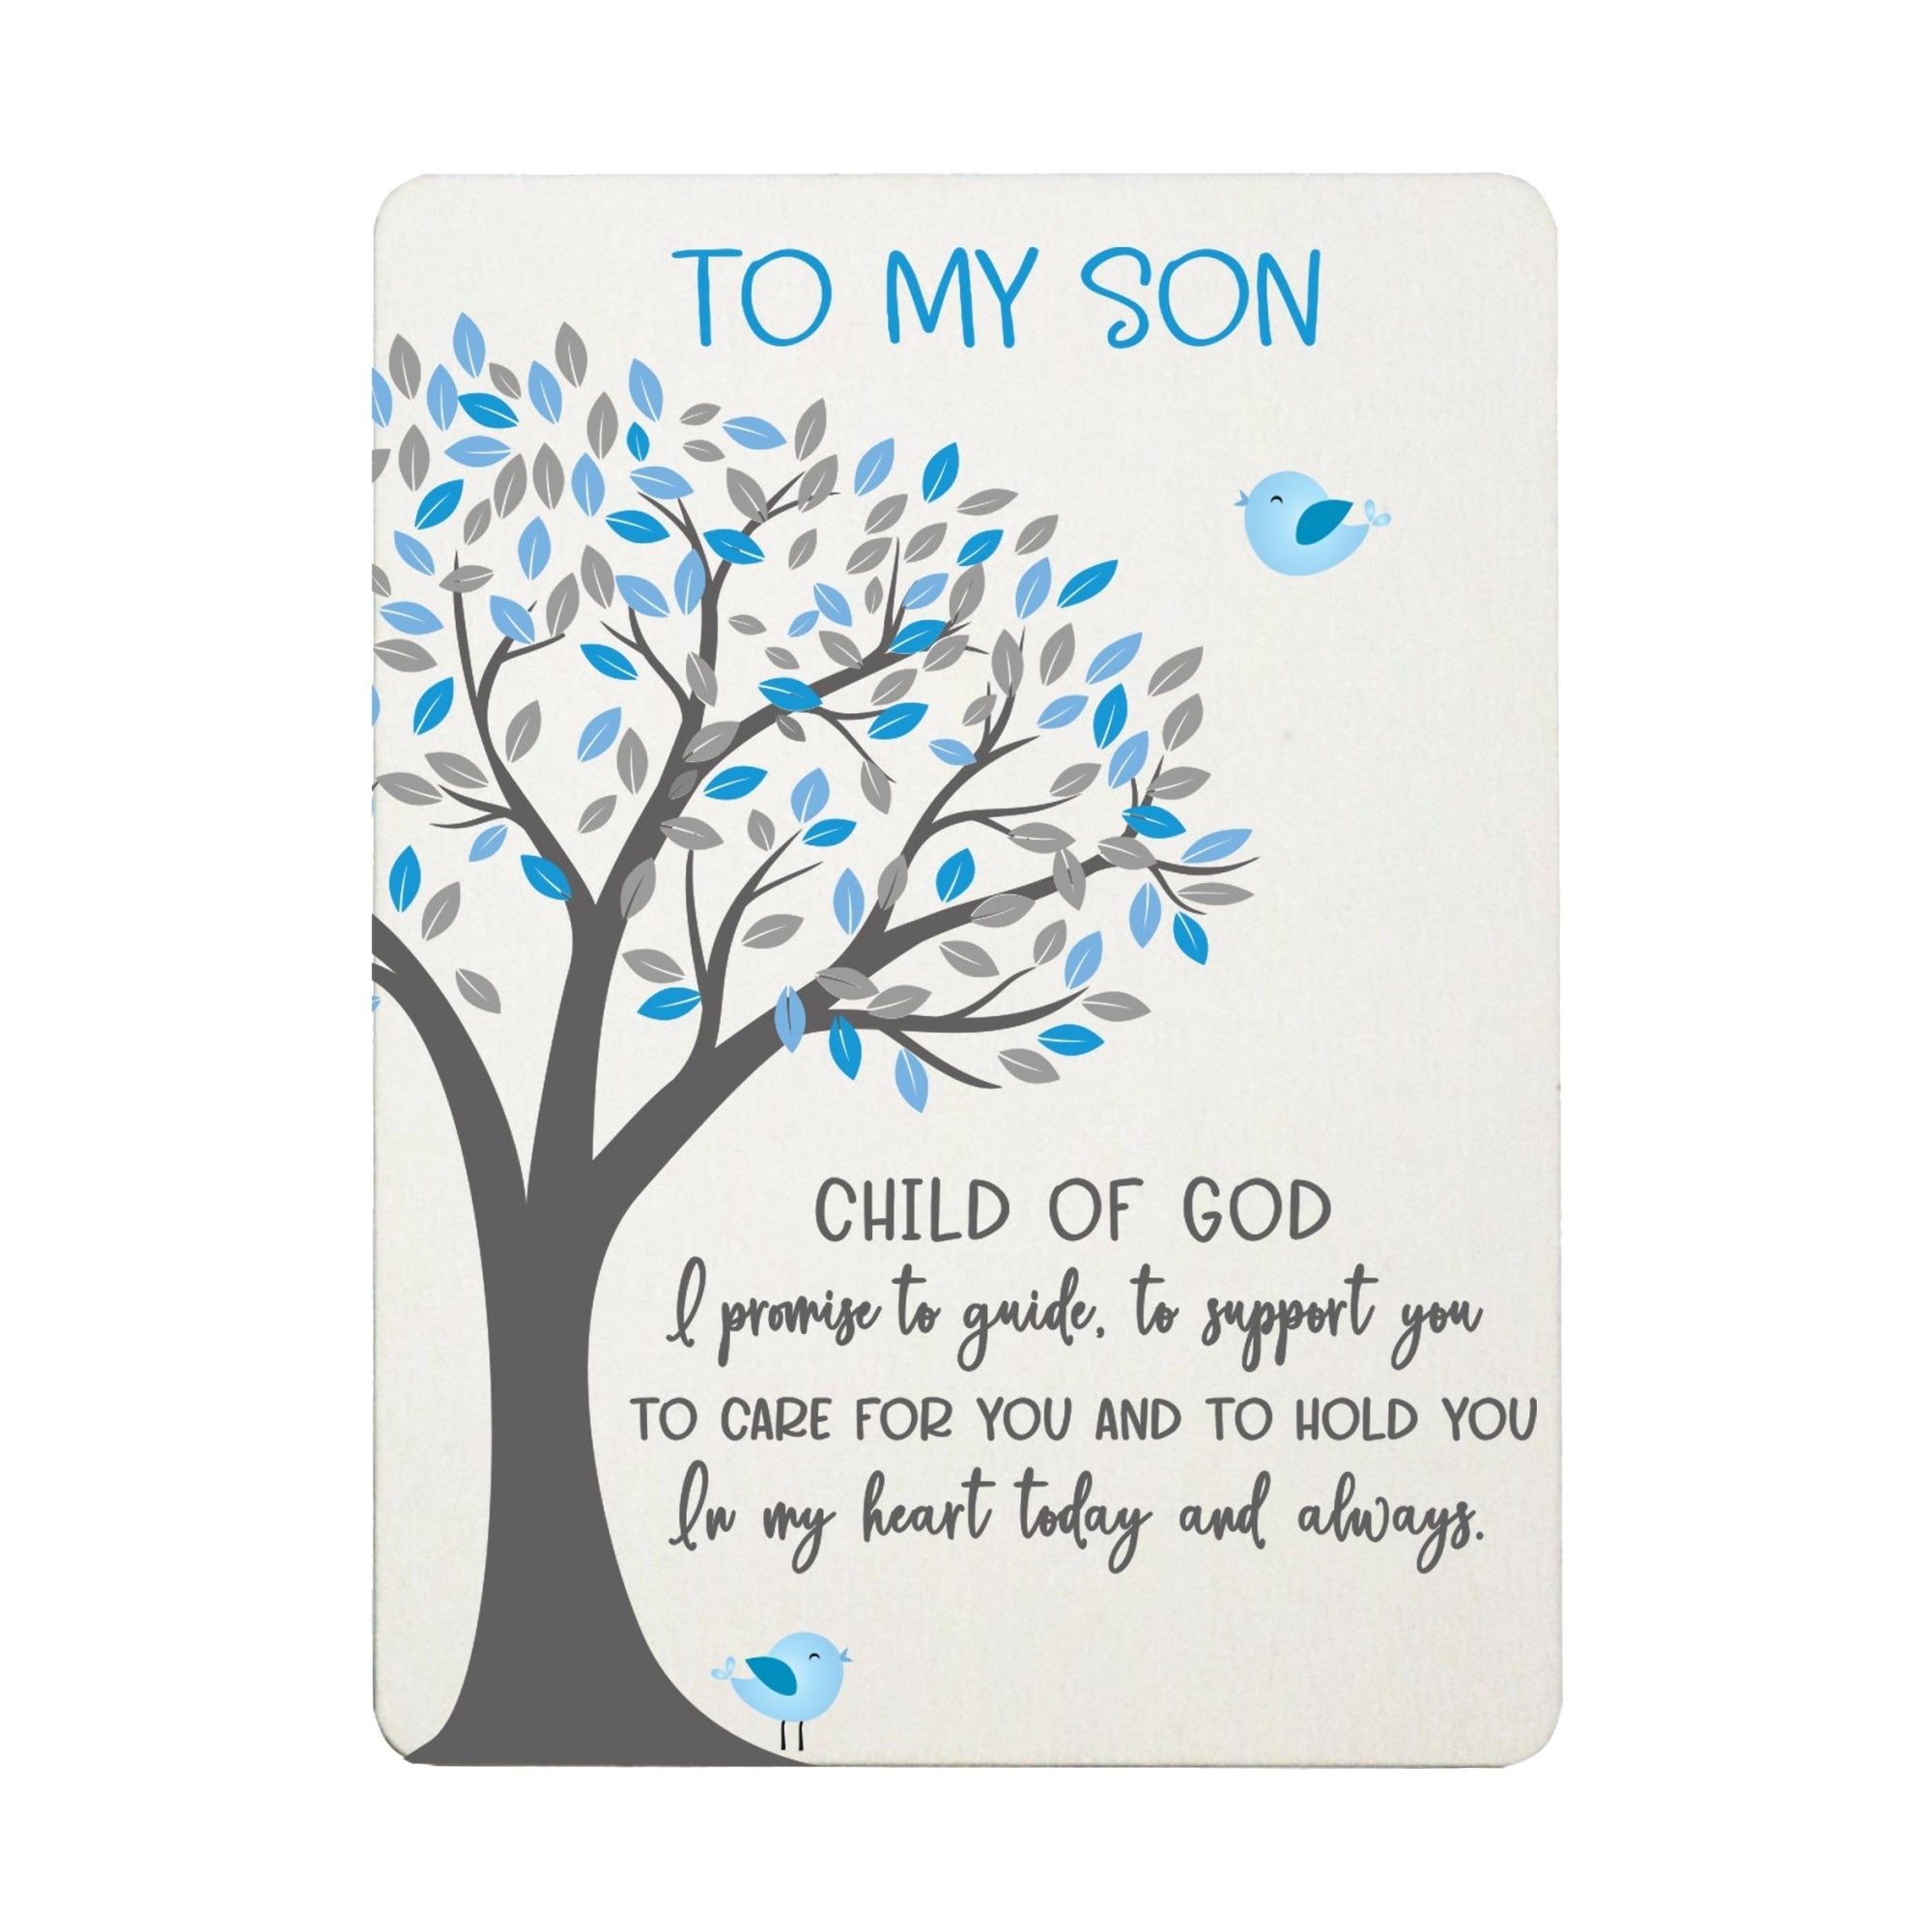 Newborn Baby Scripture Magnet for Fridge - Child of God - LifeSong Milestones